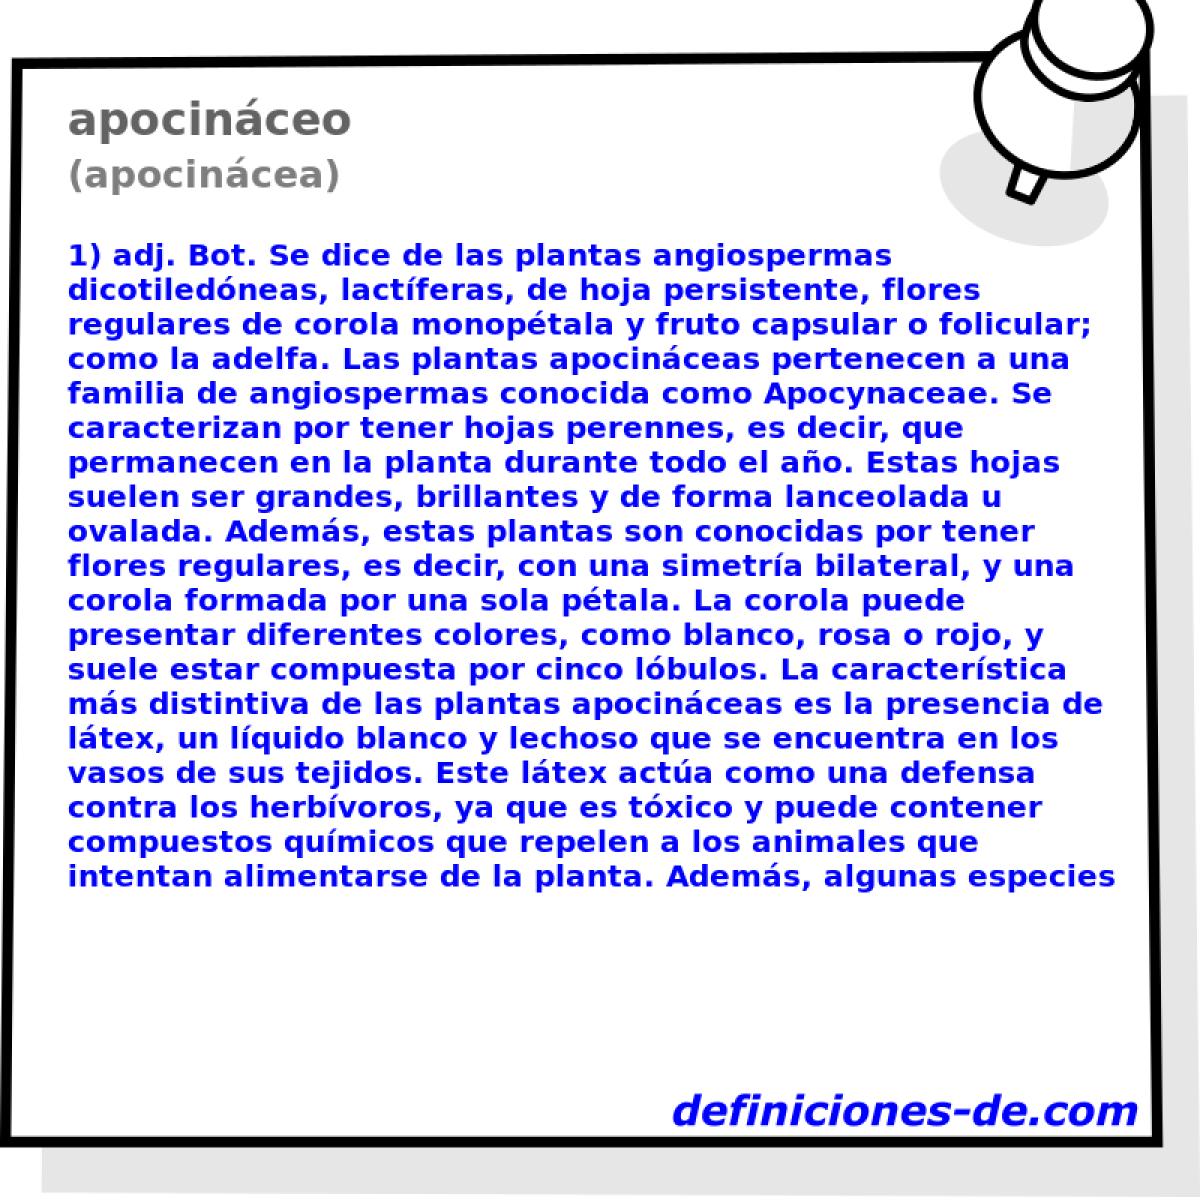 apocinceo (apocincea)